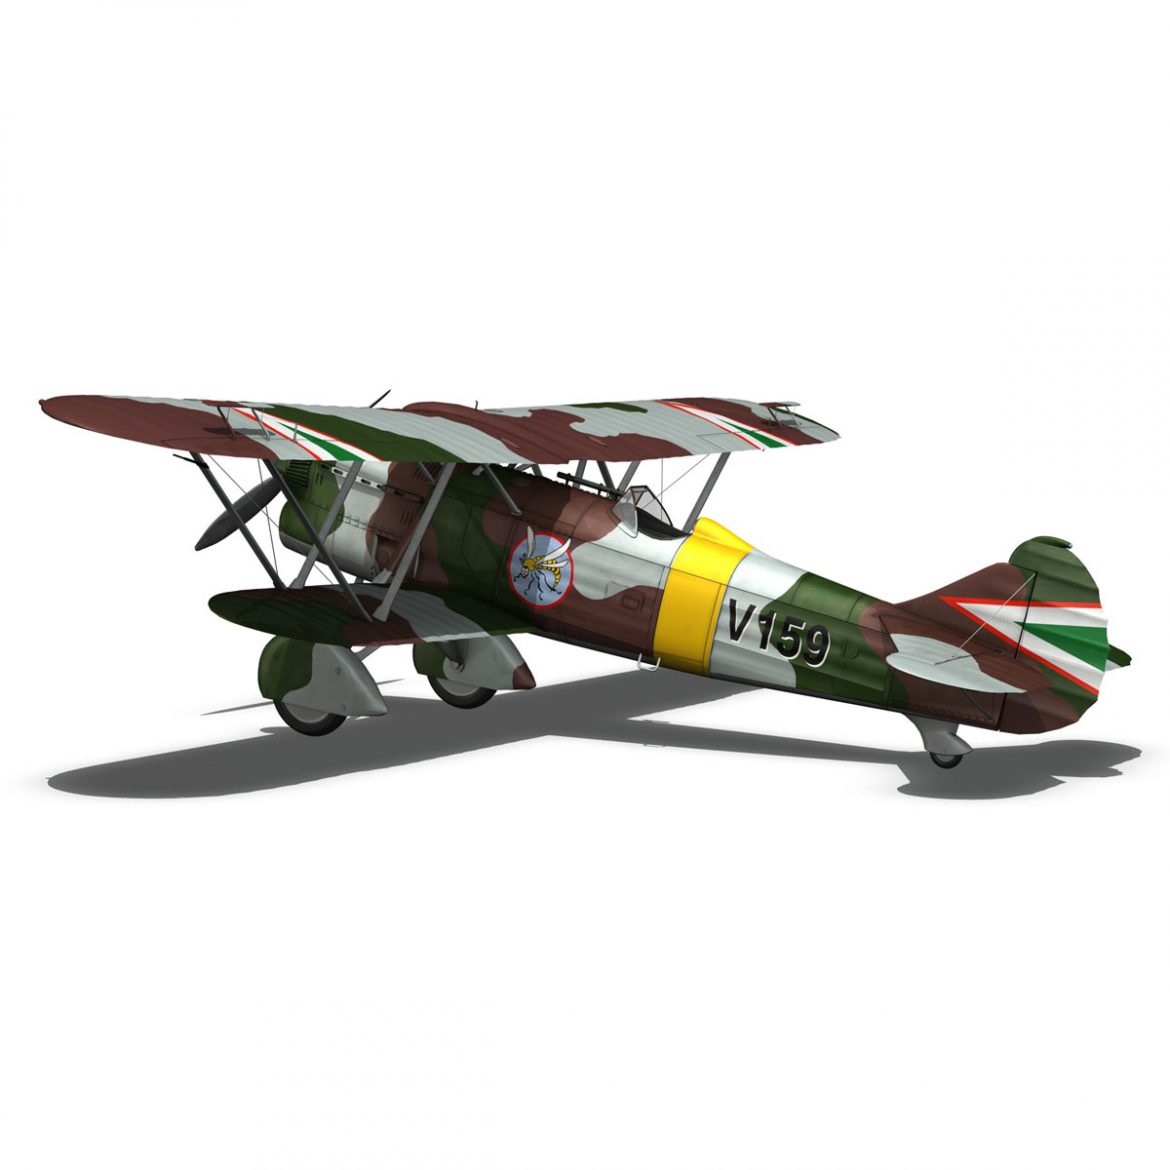 fiat cr.32 – hungarian royal air force – v159 3d model fbx c4d lwo obj 299971